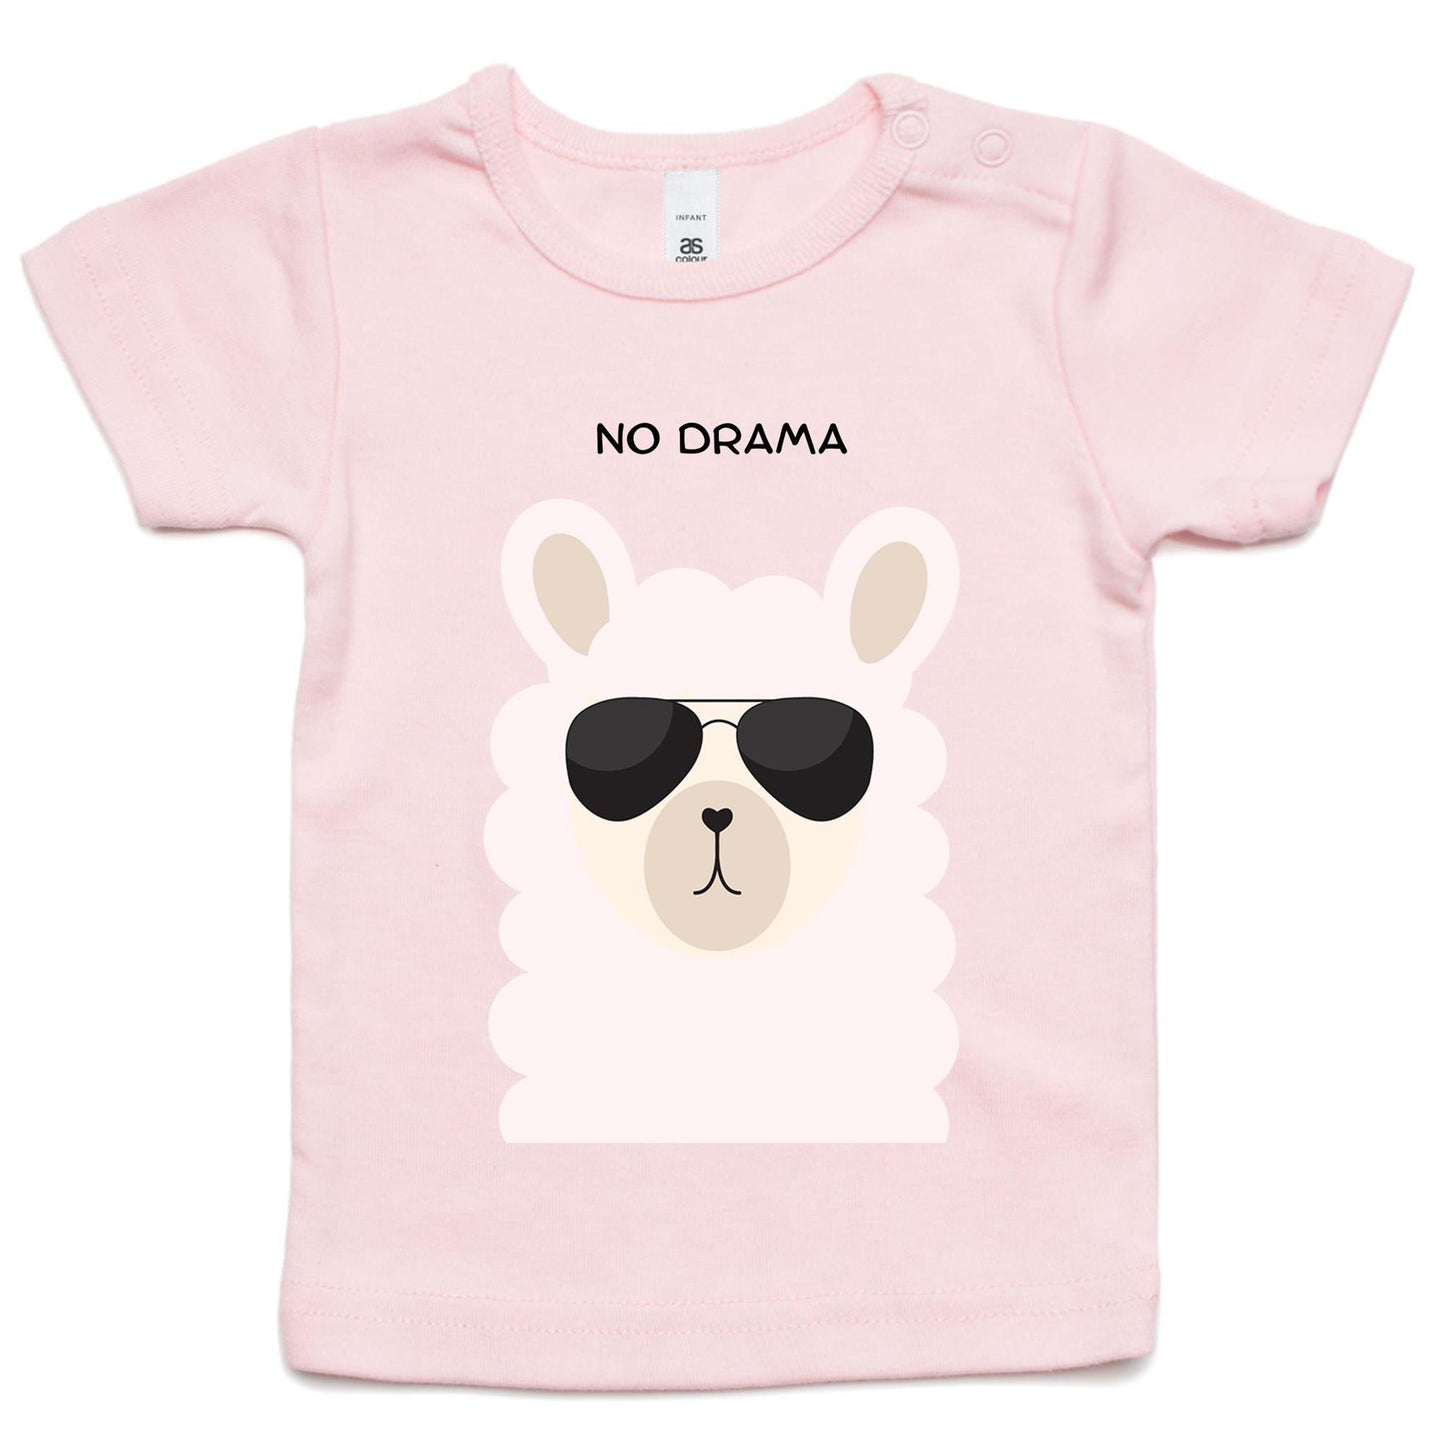 No Drama - Baby T-shirt Pink Baby T-shirt animal